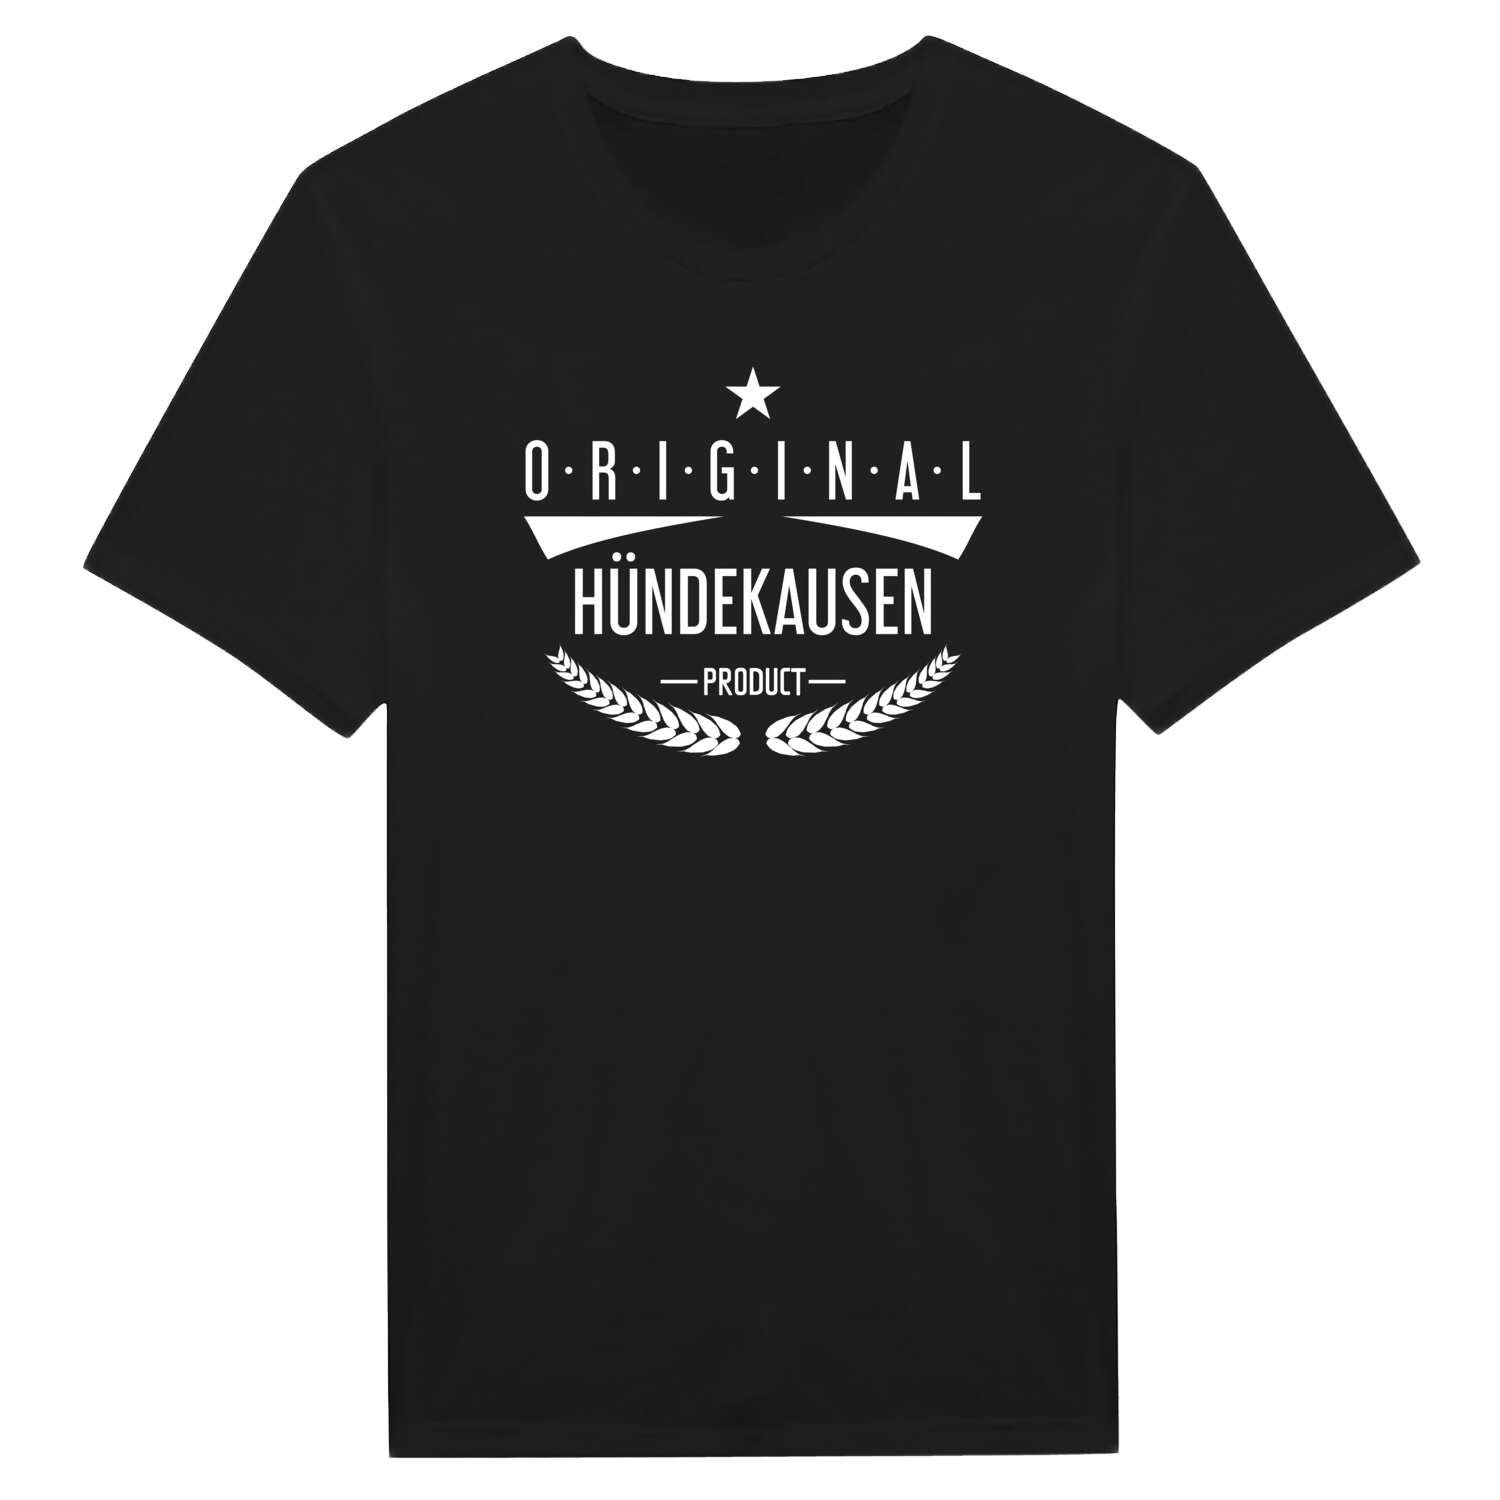 Hündekausen T-Shirt »Original Product«